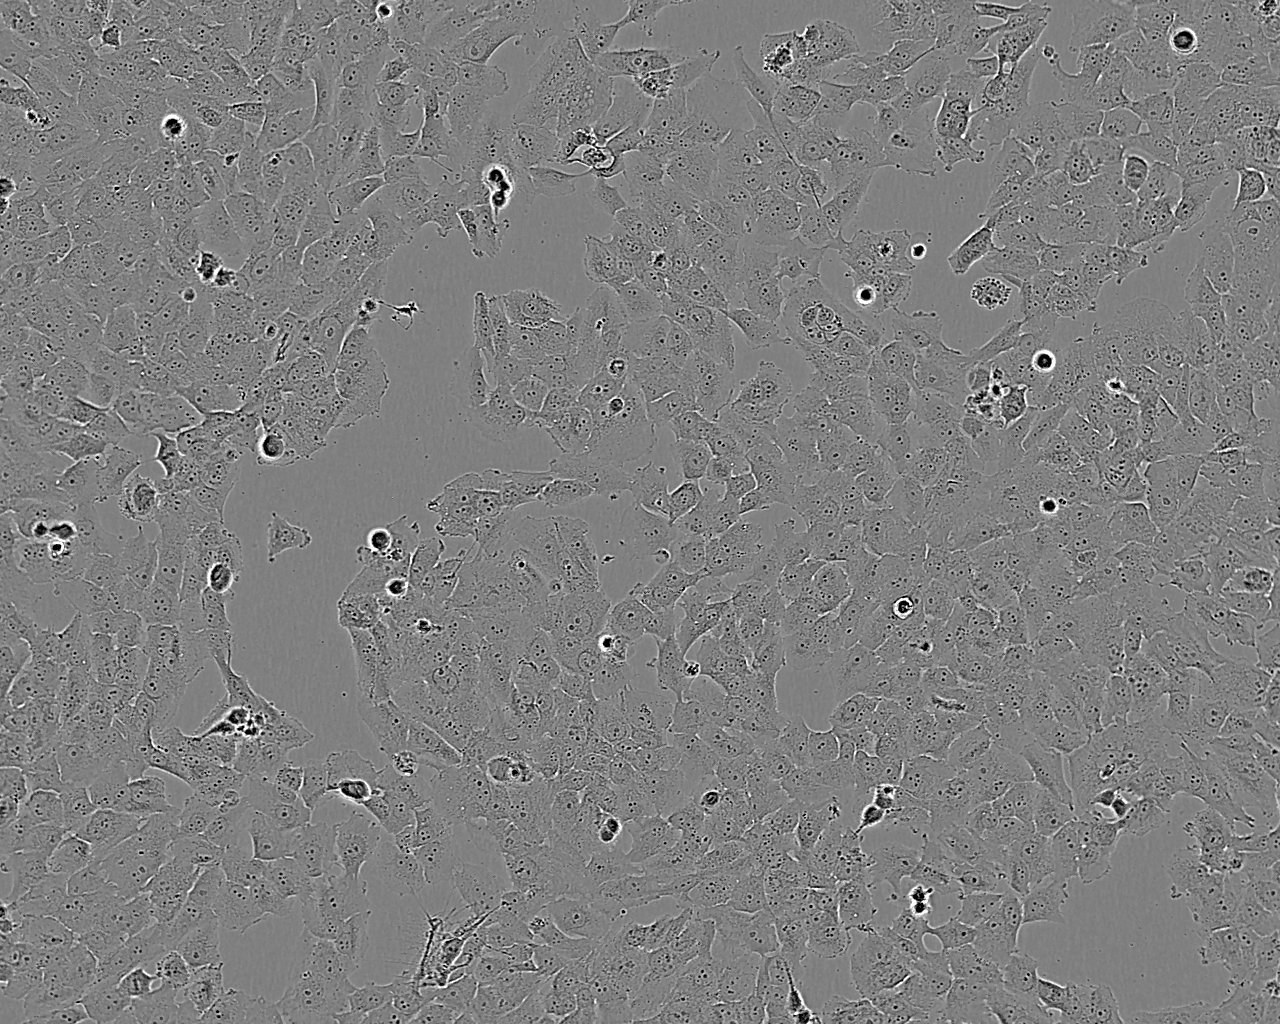 AM-38 epithelioid cells人脑胶质母细胞瘤细胞系